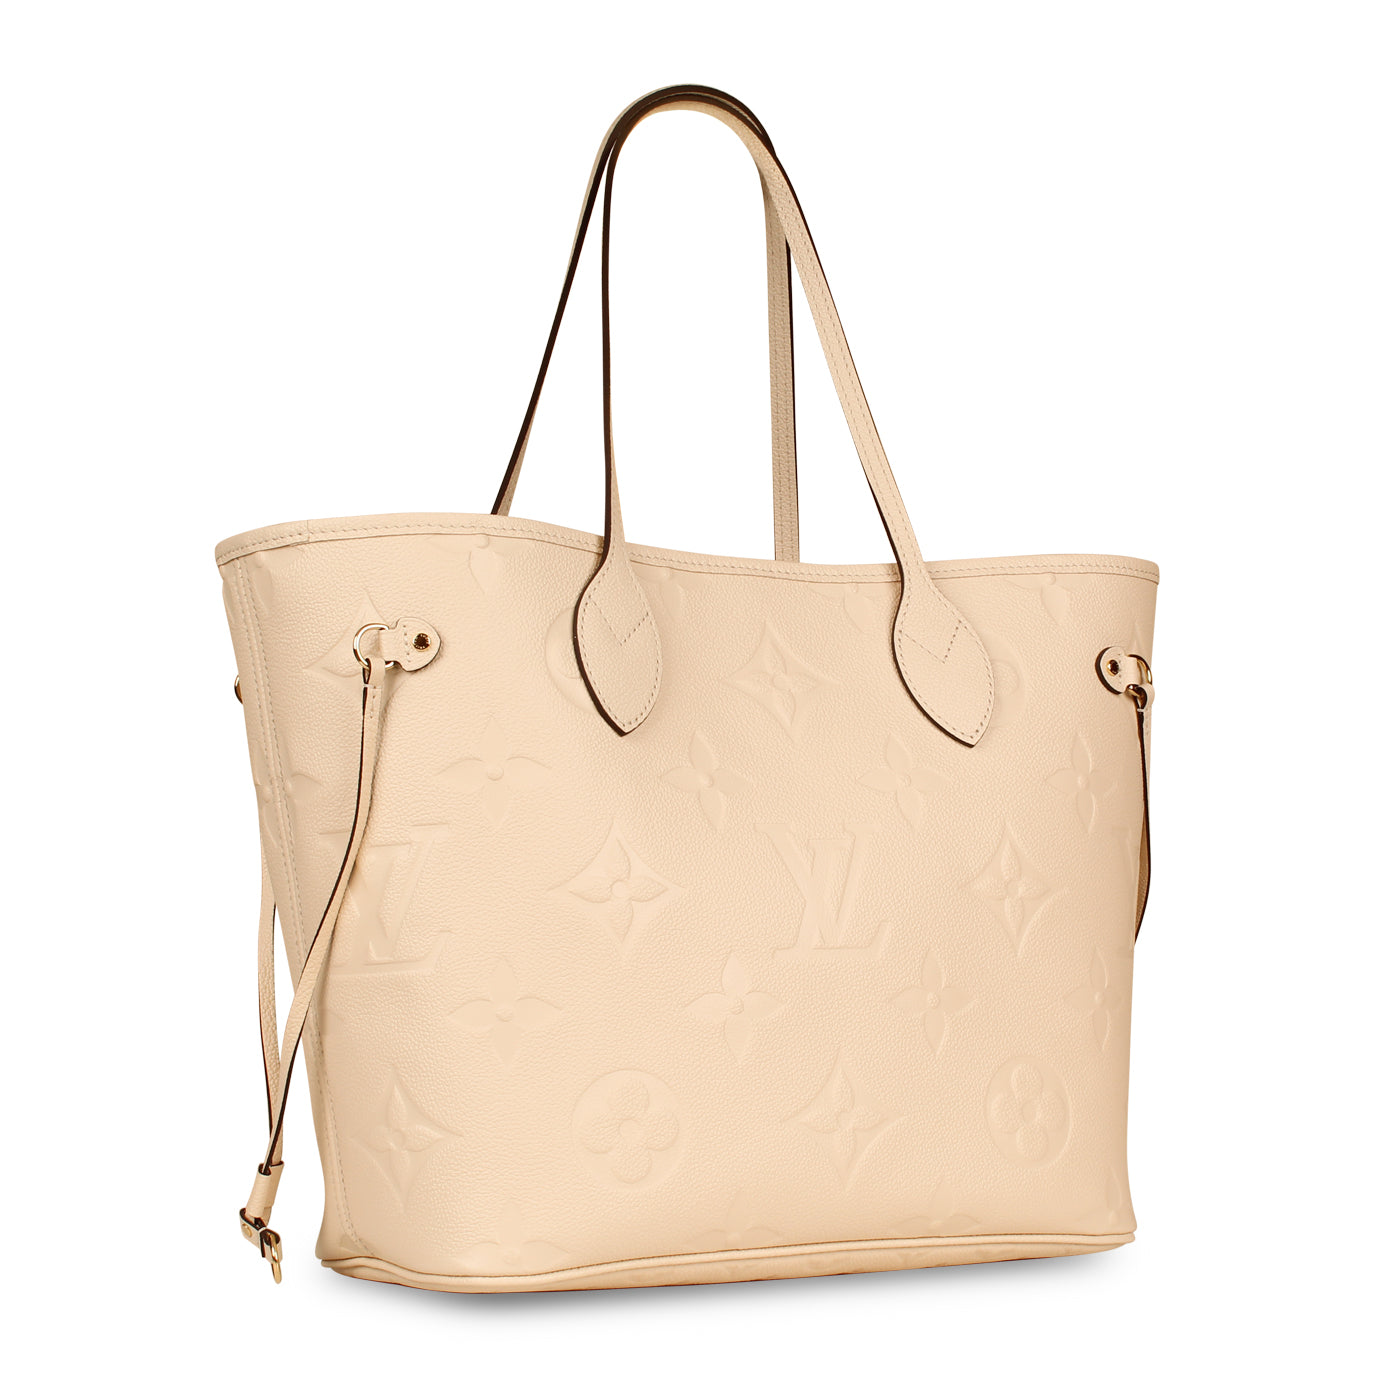 Best Bag Ever?! Louis Vuitton Empreinte Neverfull review & worth